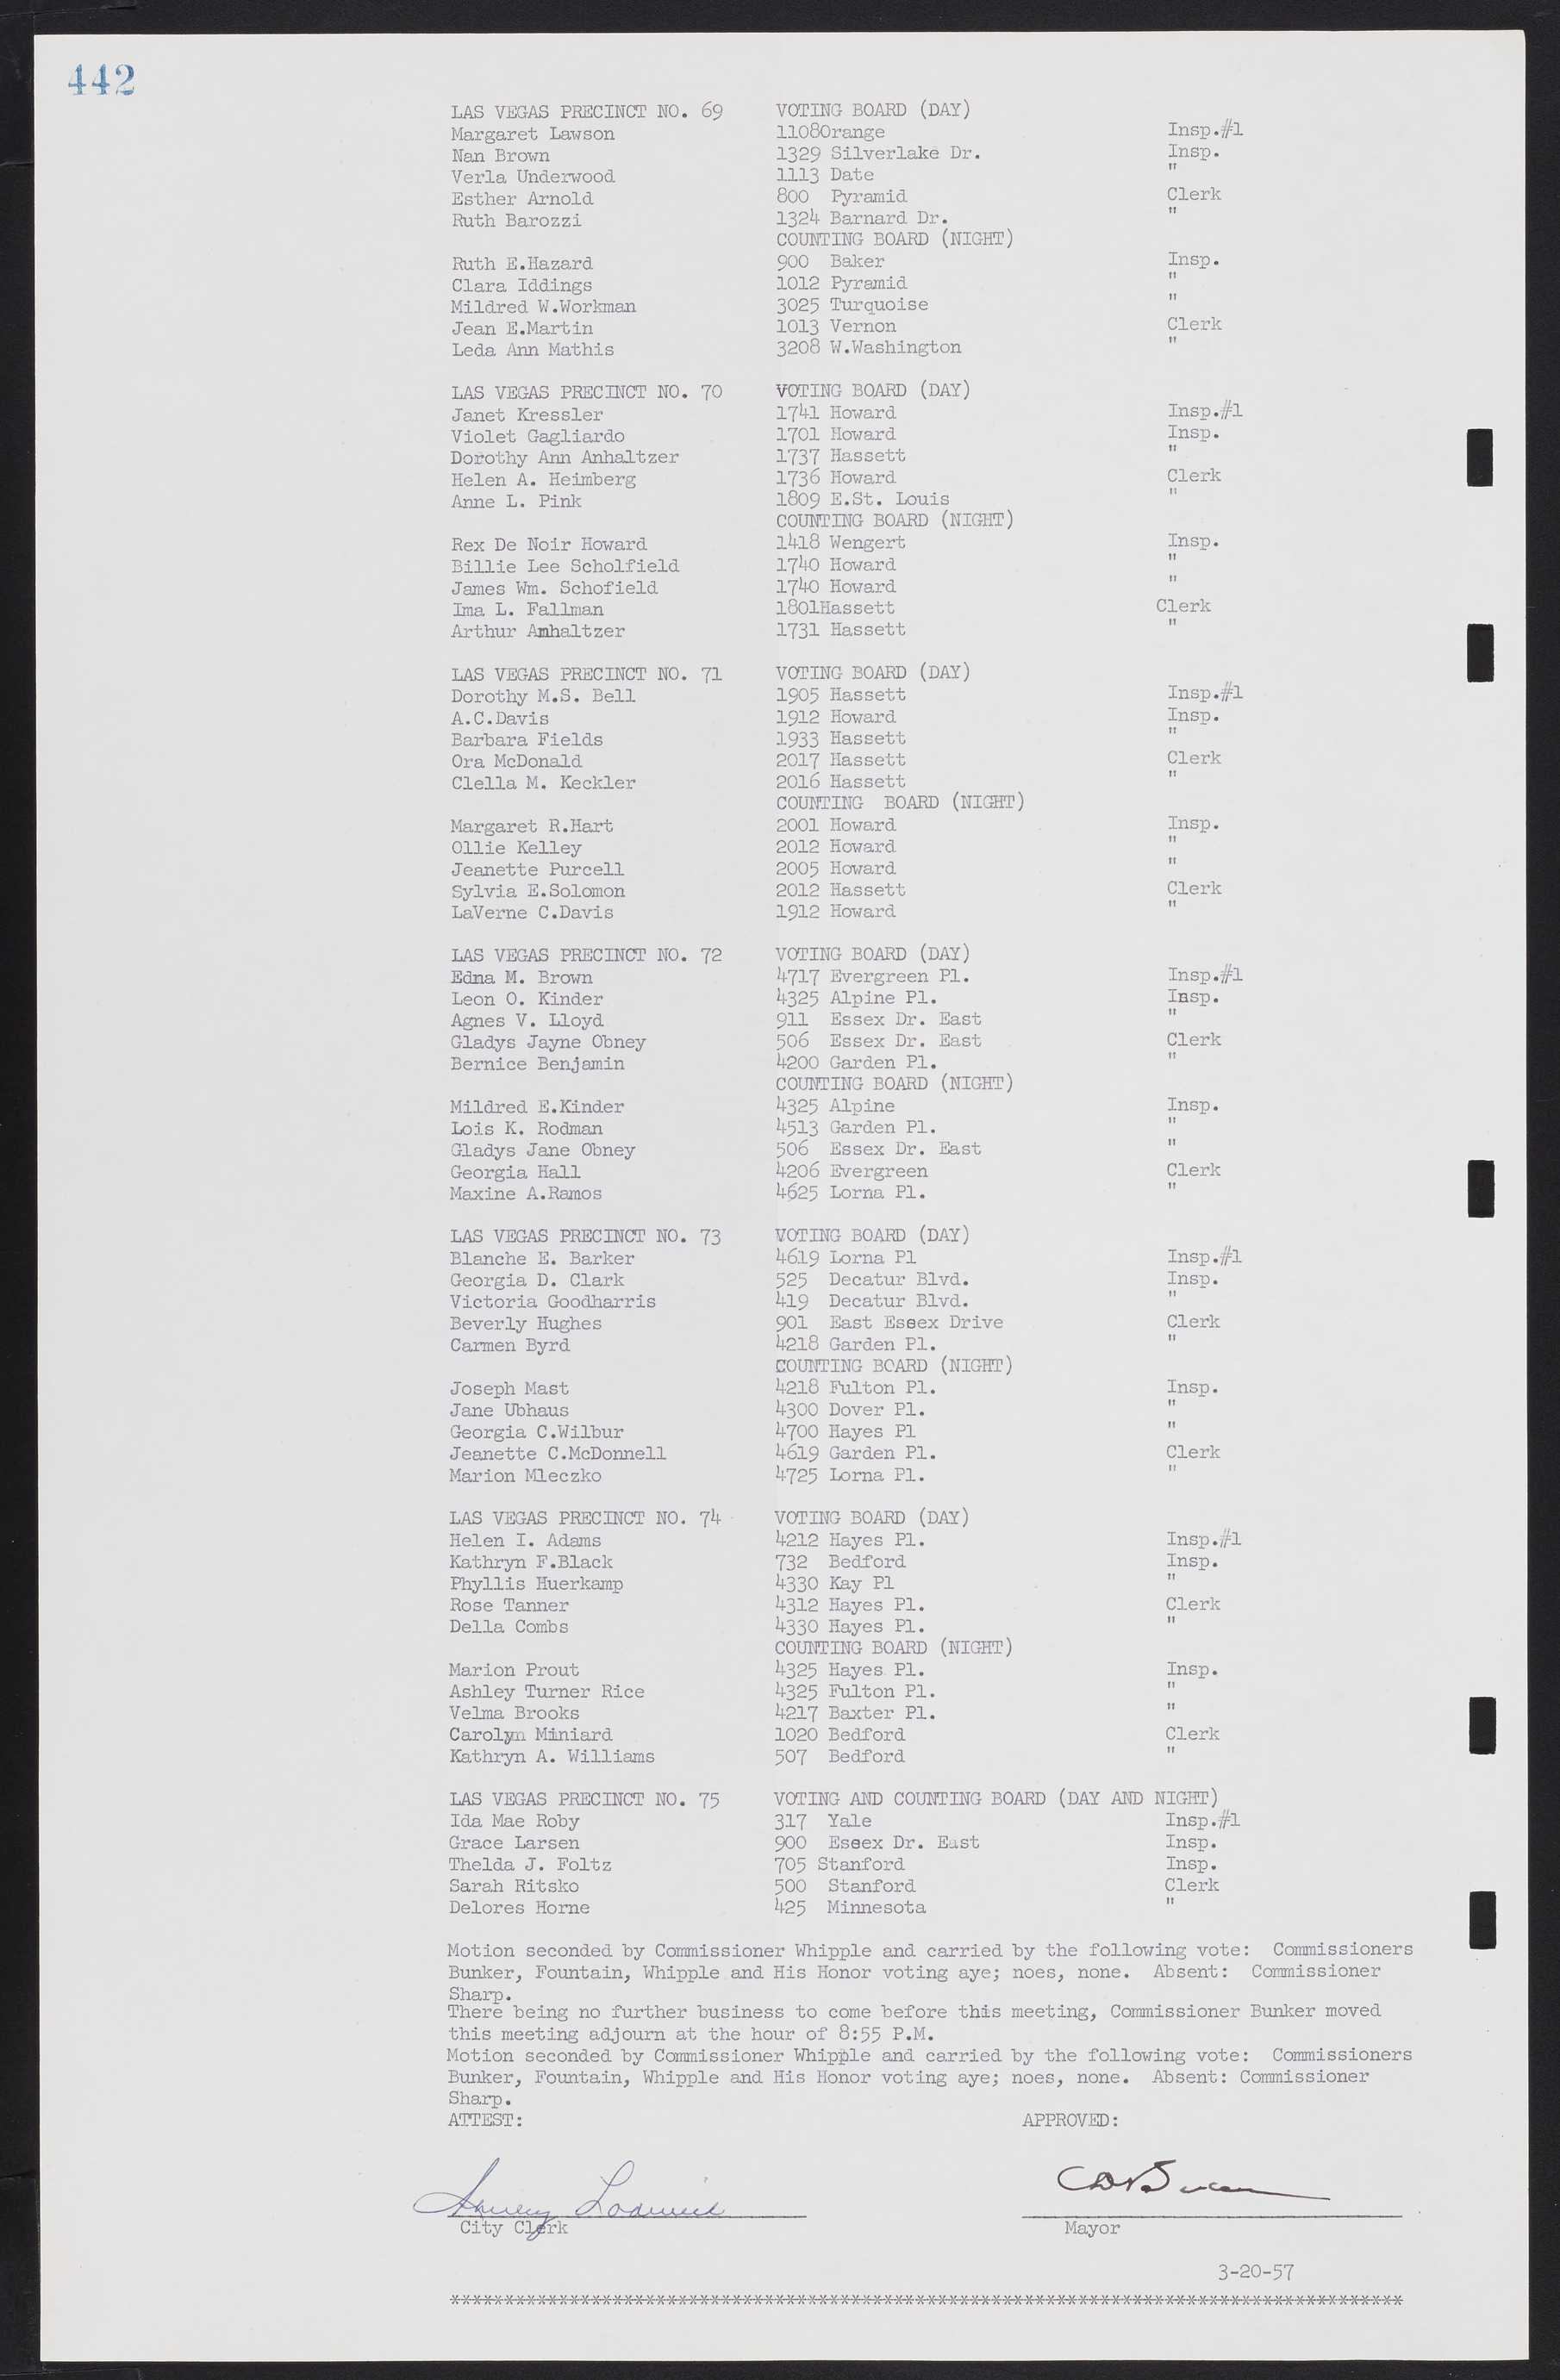 Las Vegas City Commission Minutes, September 21, 1955 to November 20, 1957, lvc000010-462